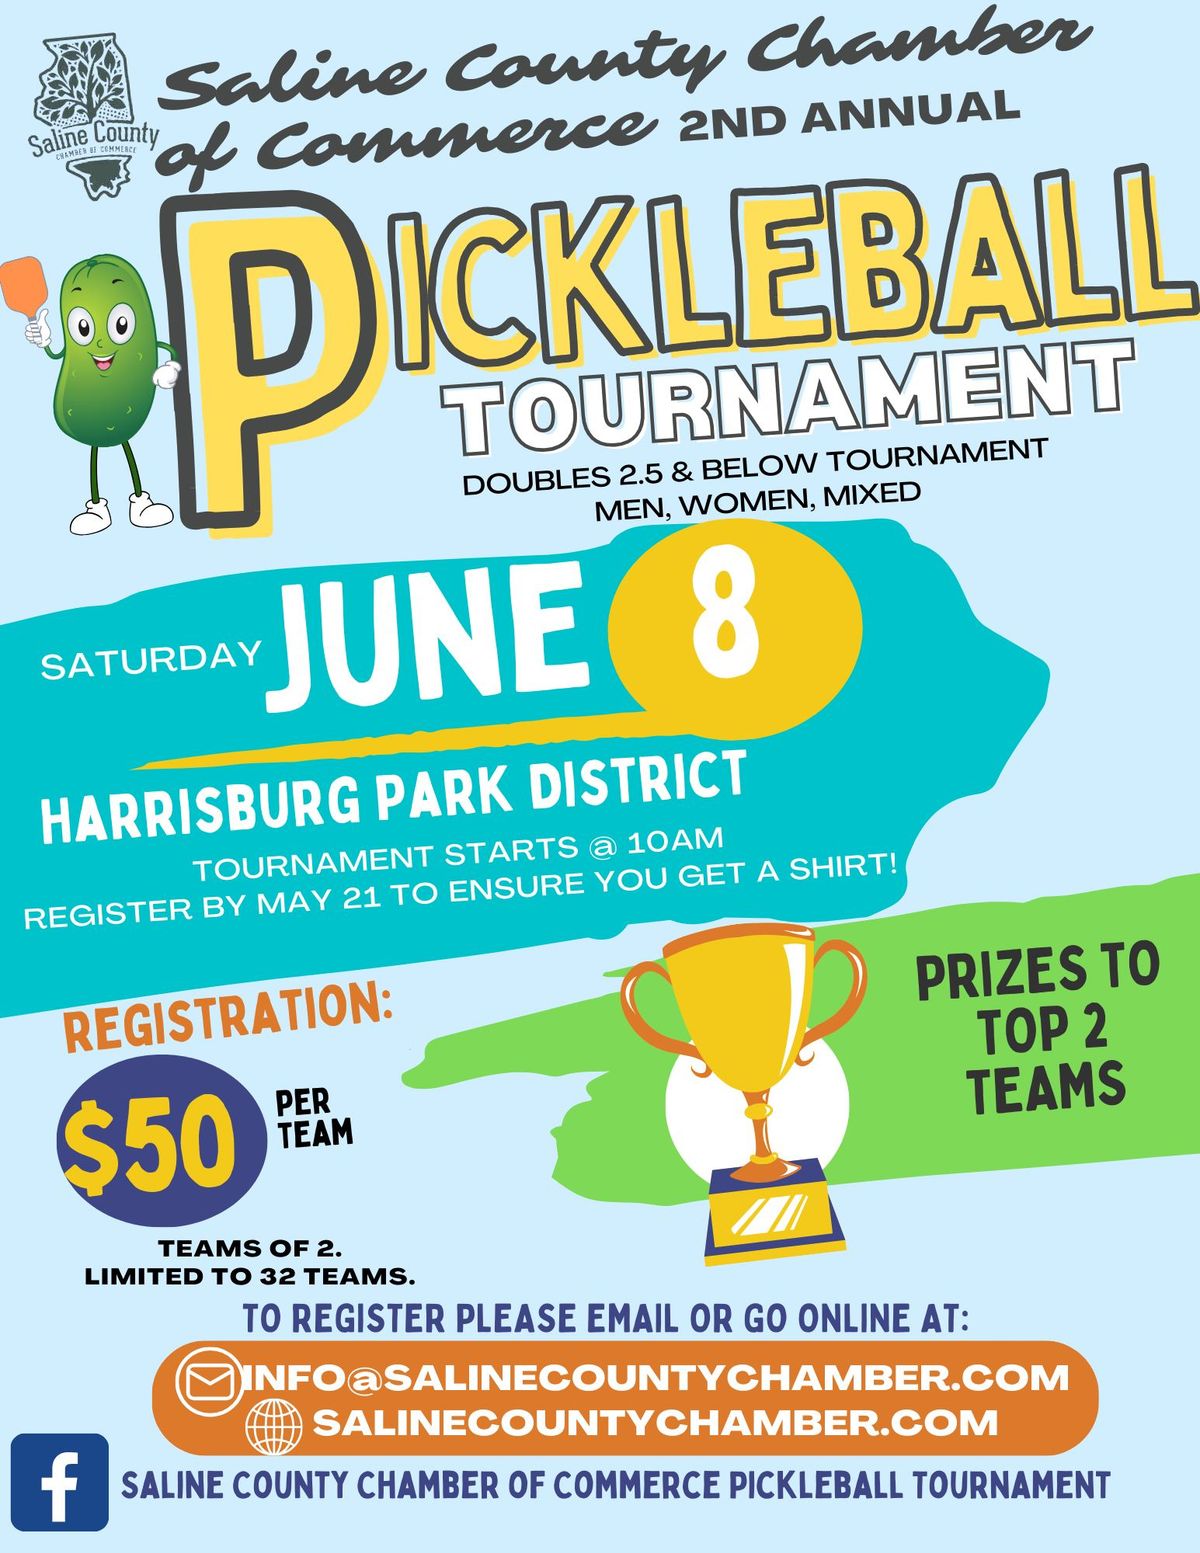 Saline County Chamber of Commerce Pickleball Tournament!